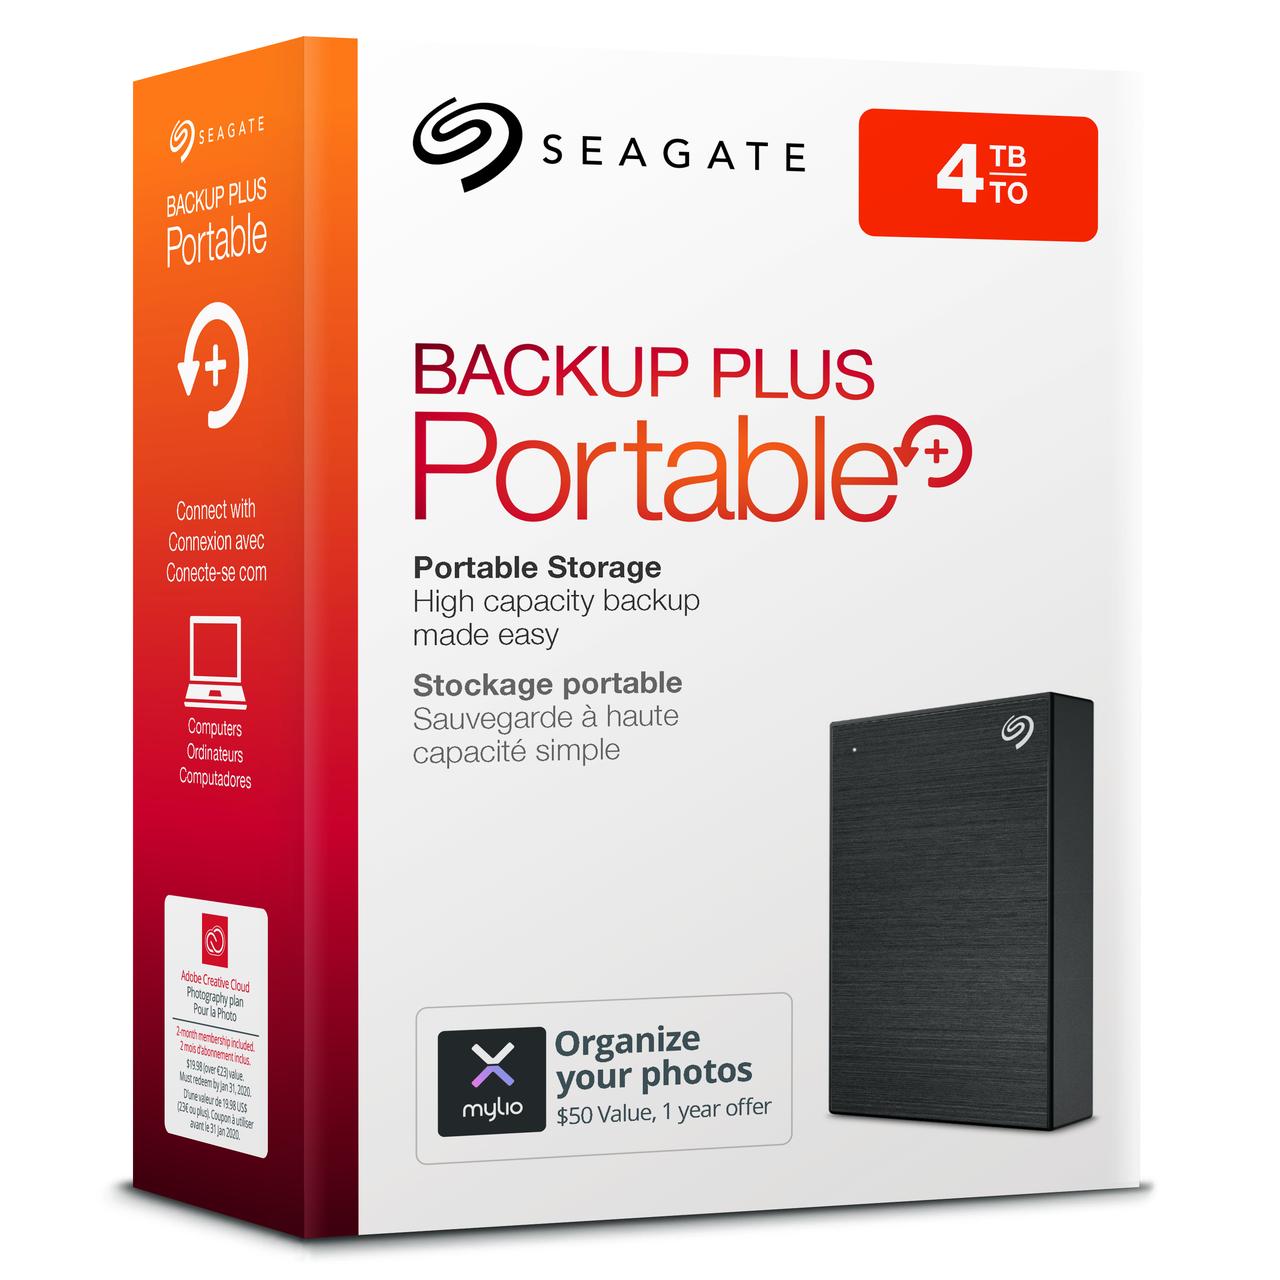 Seagate Backup Plus Portable 4TB External USB 3.0 Hard Drive - Black - image 2 of 8